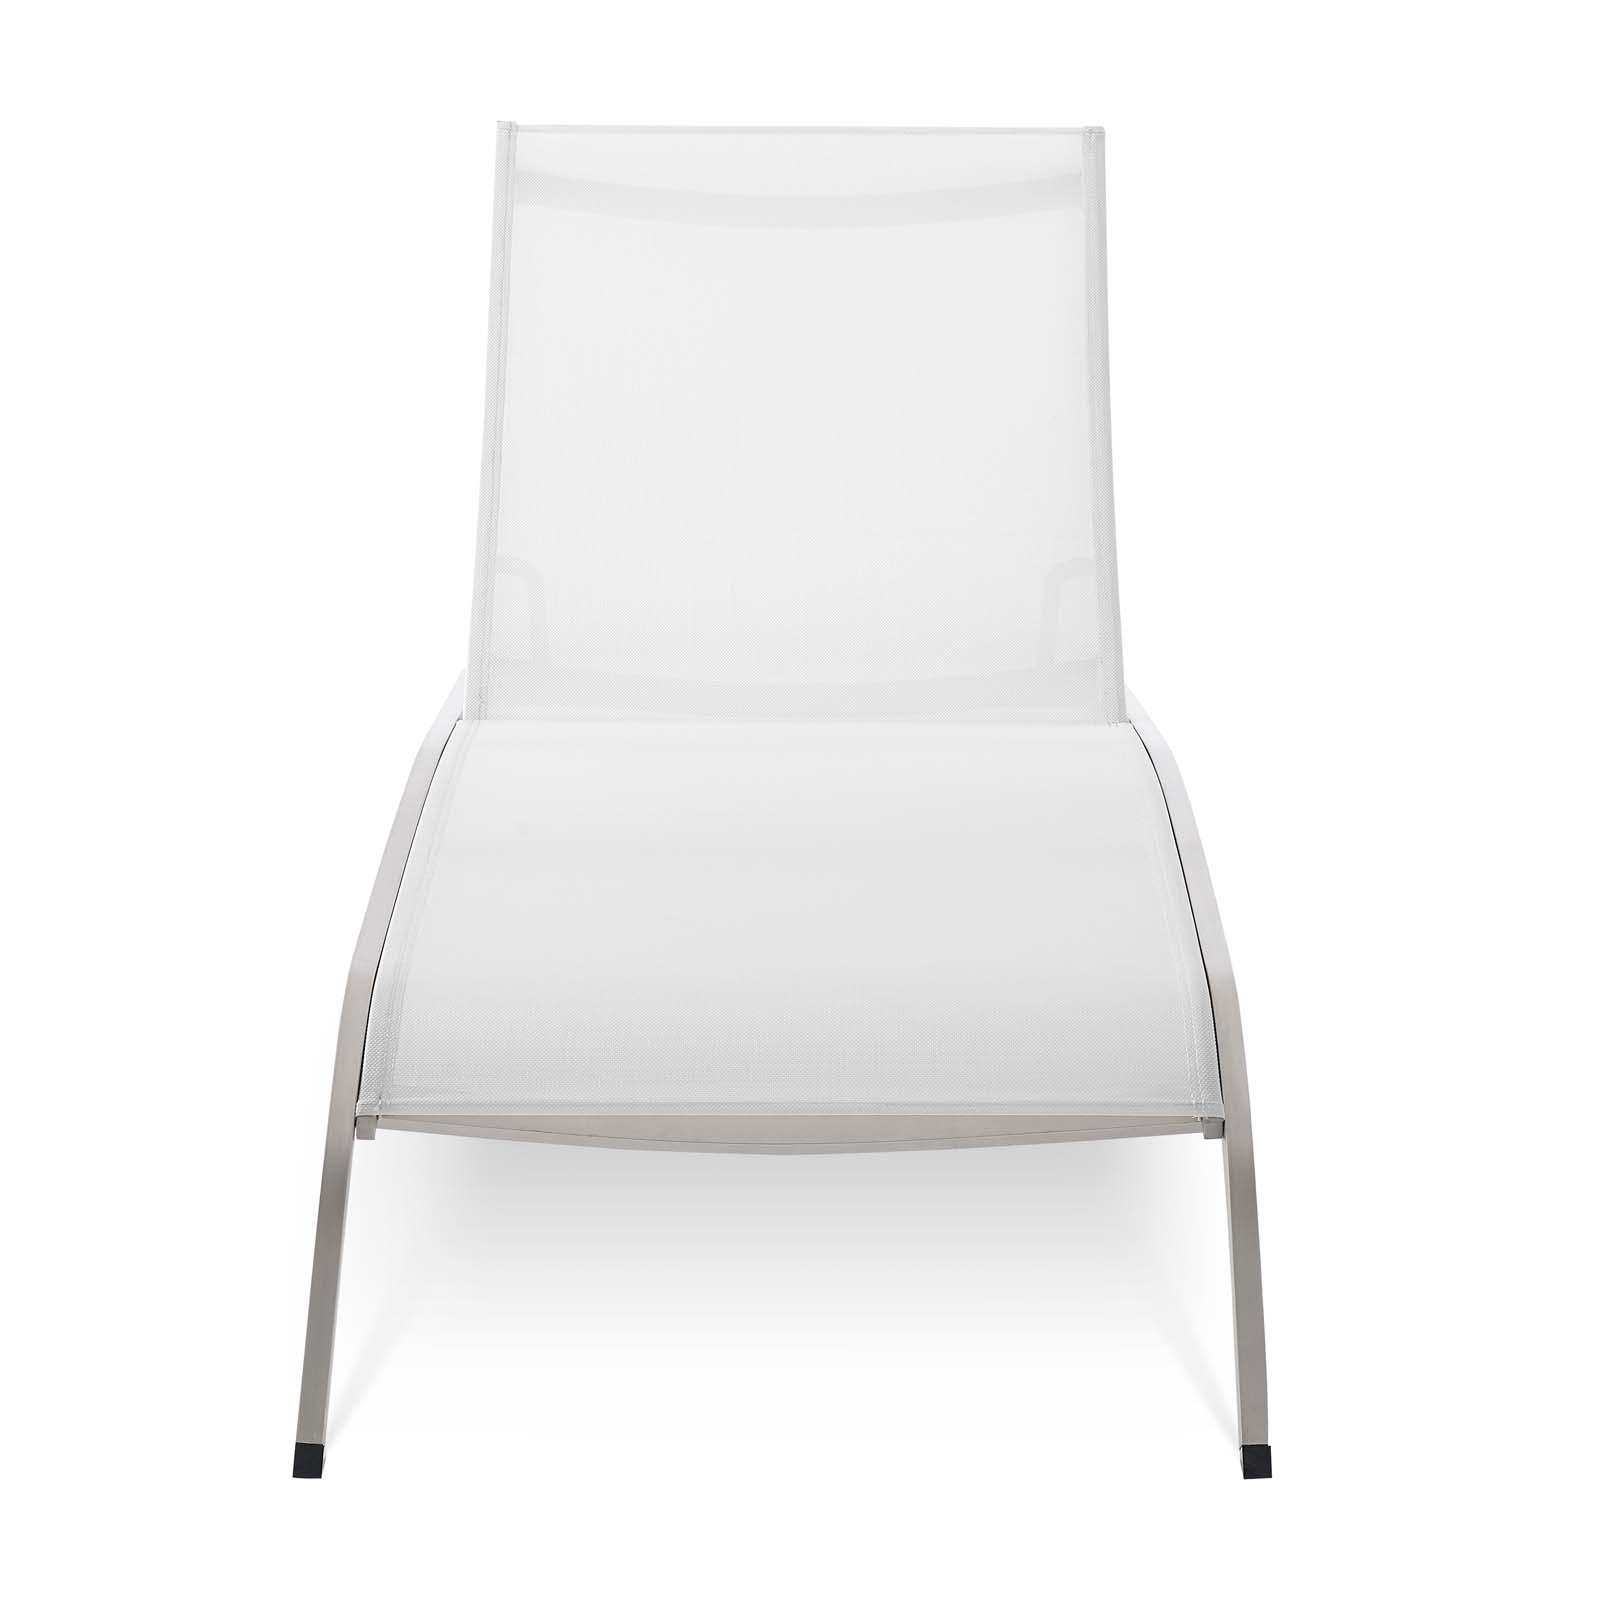 Contemporary Modern Urban Designer Outdoor Patio Balcony Garden Furniture Lounge Lounge Chair, Aluminum, White - image 3 of 6